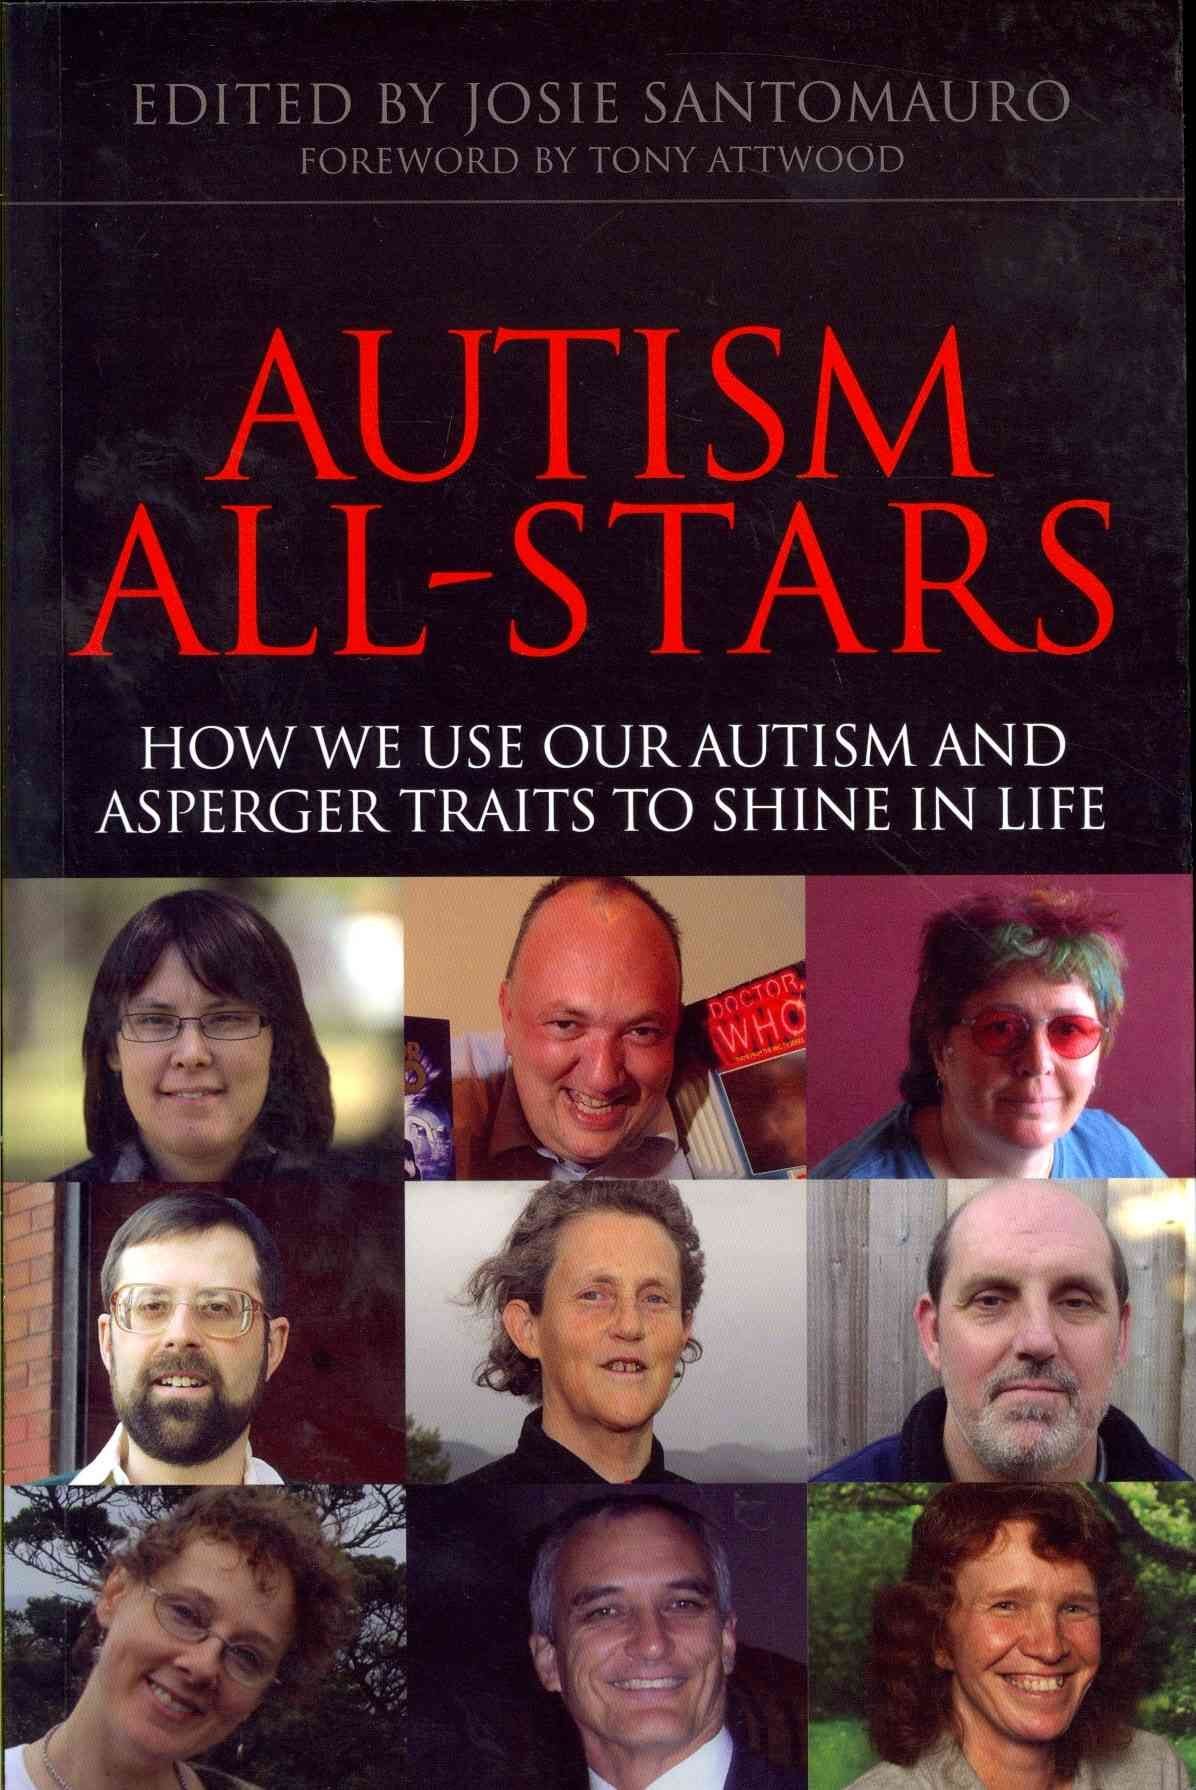 Autism All-Stars